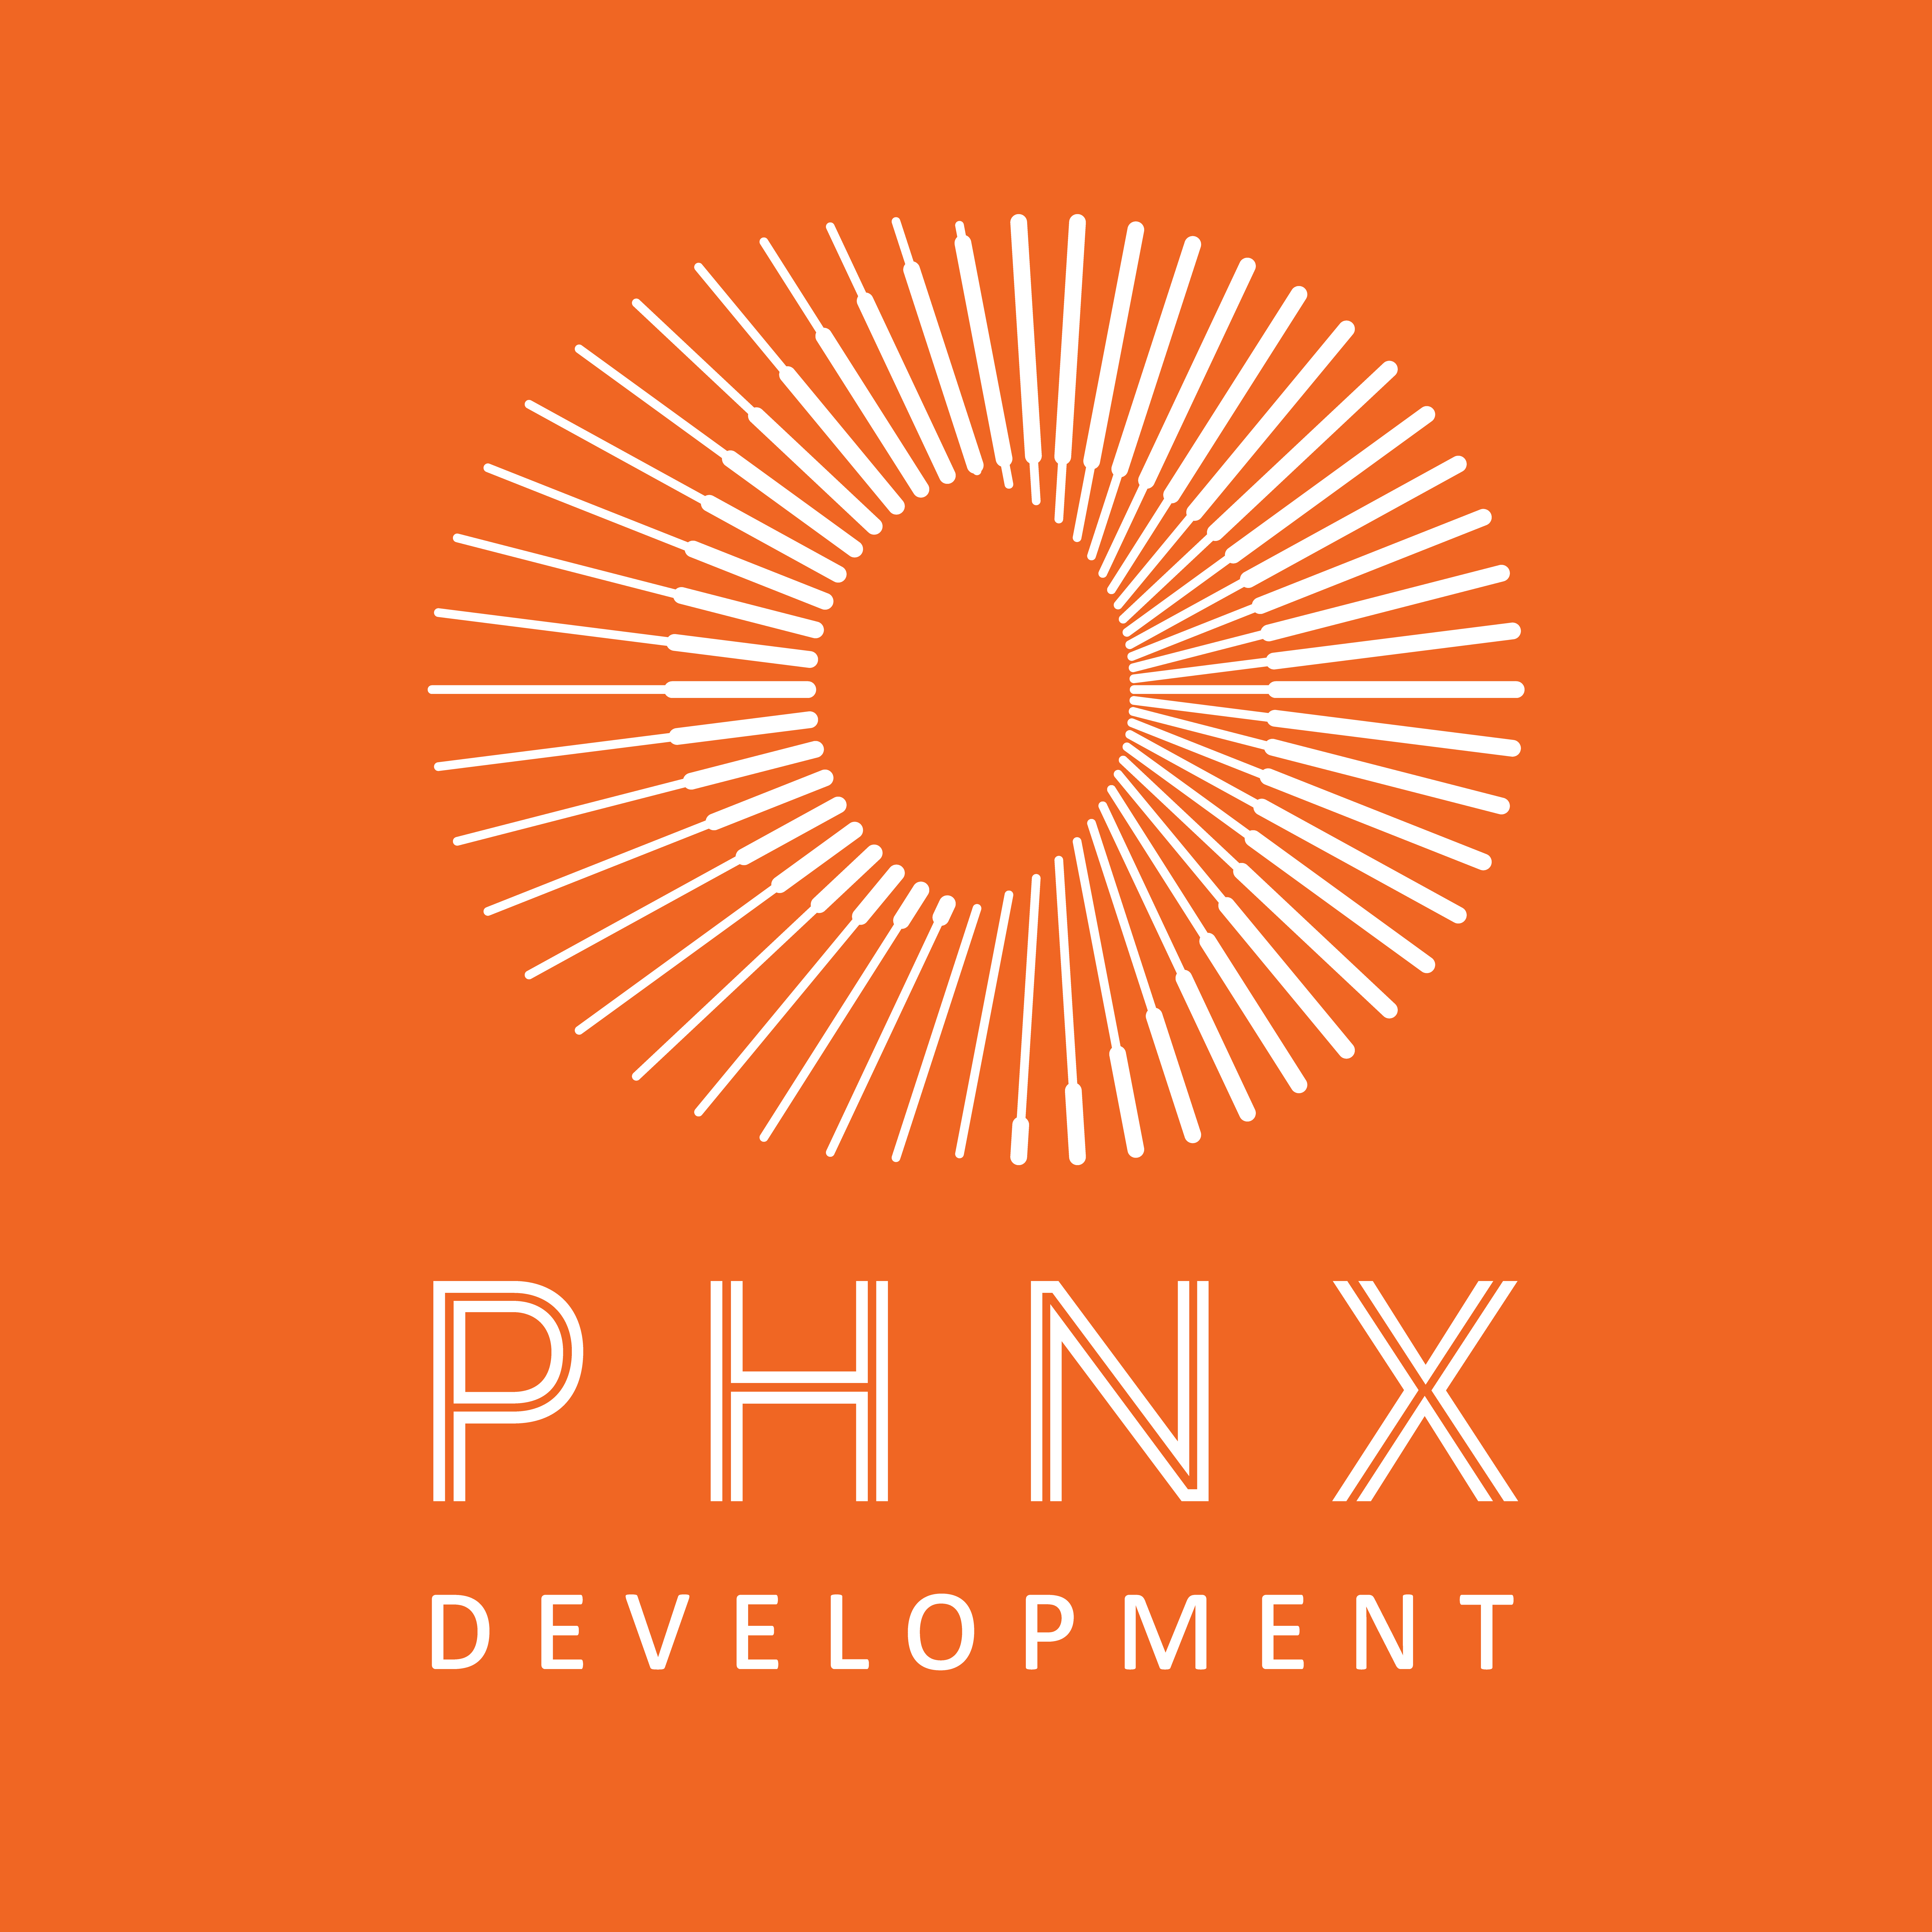 PHNX Development company logo